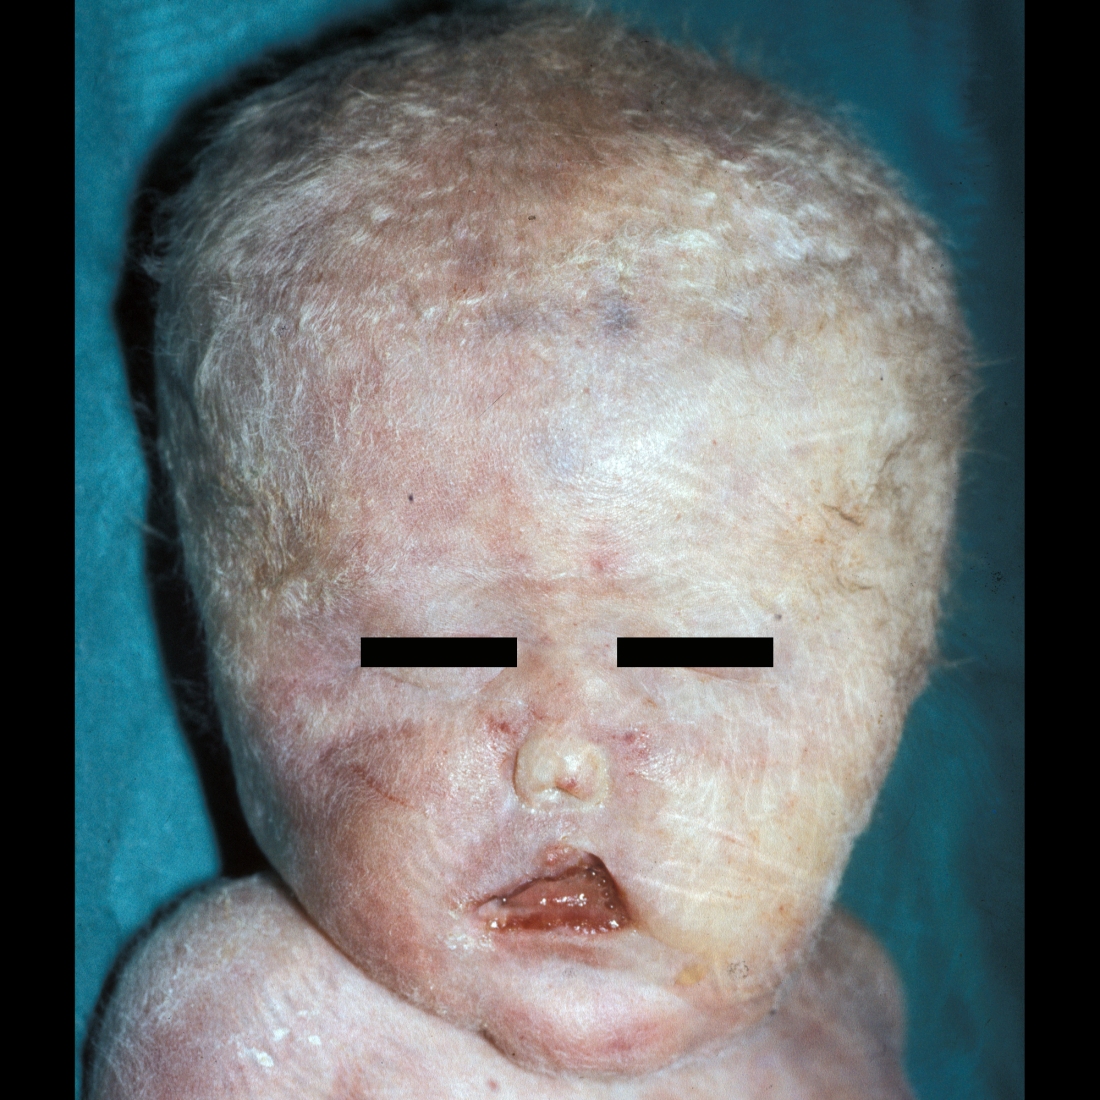 Newborn with abnormal facies